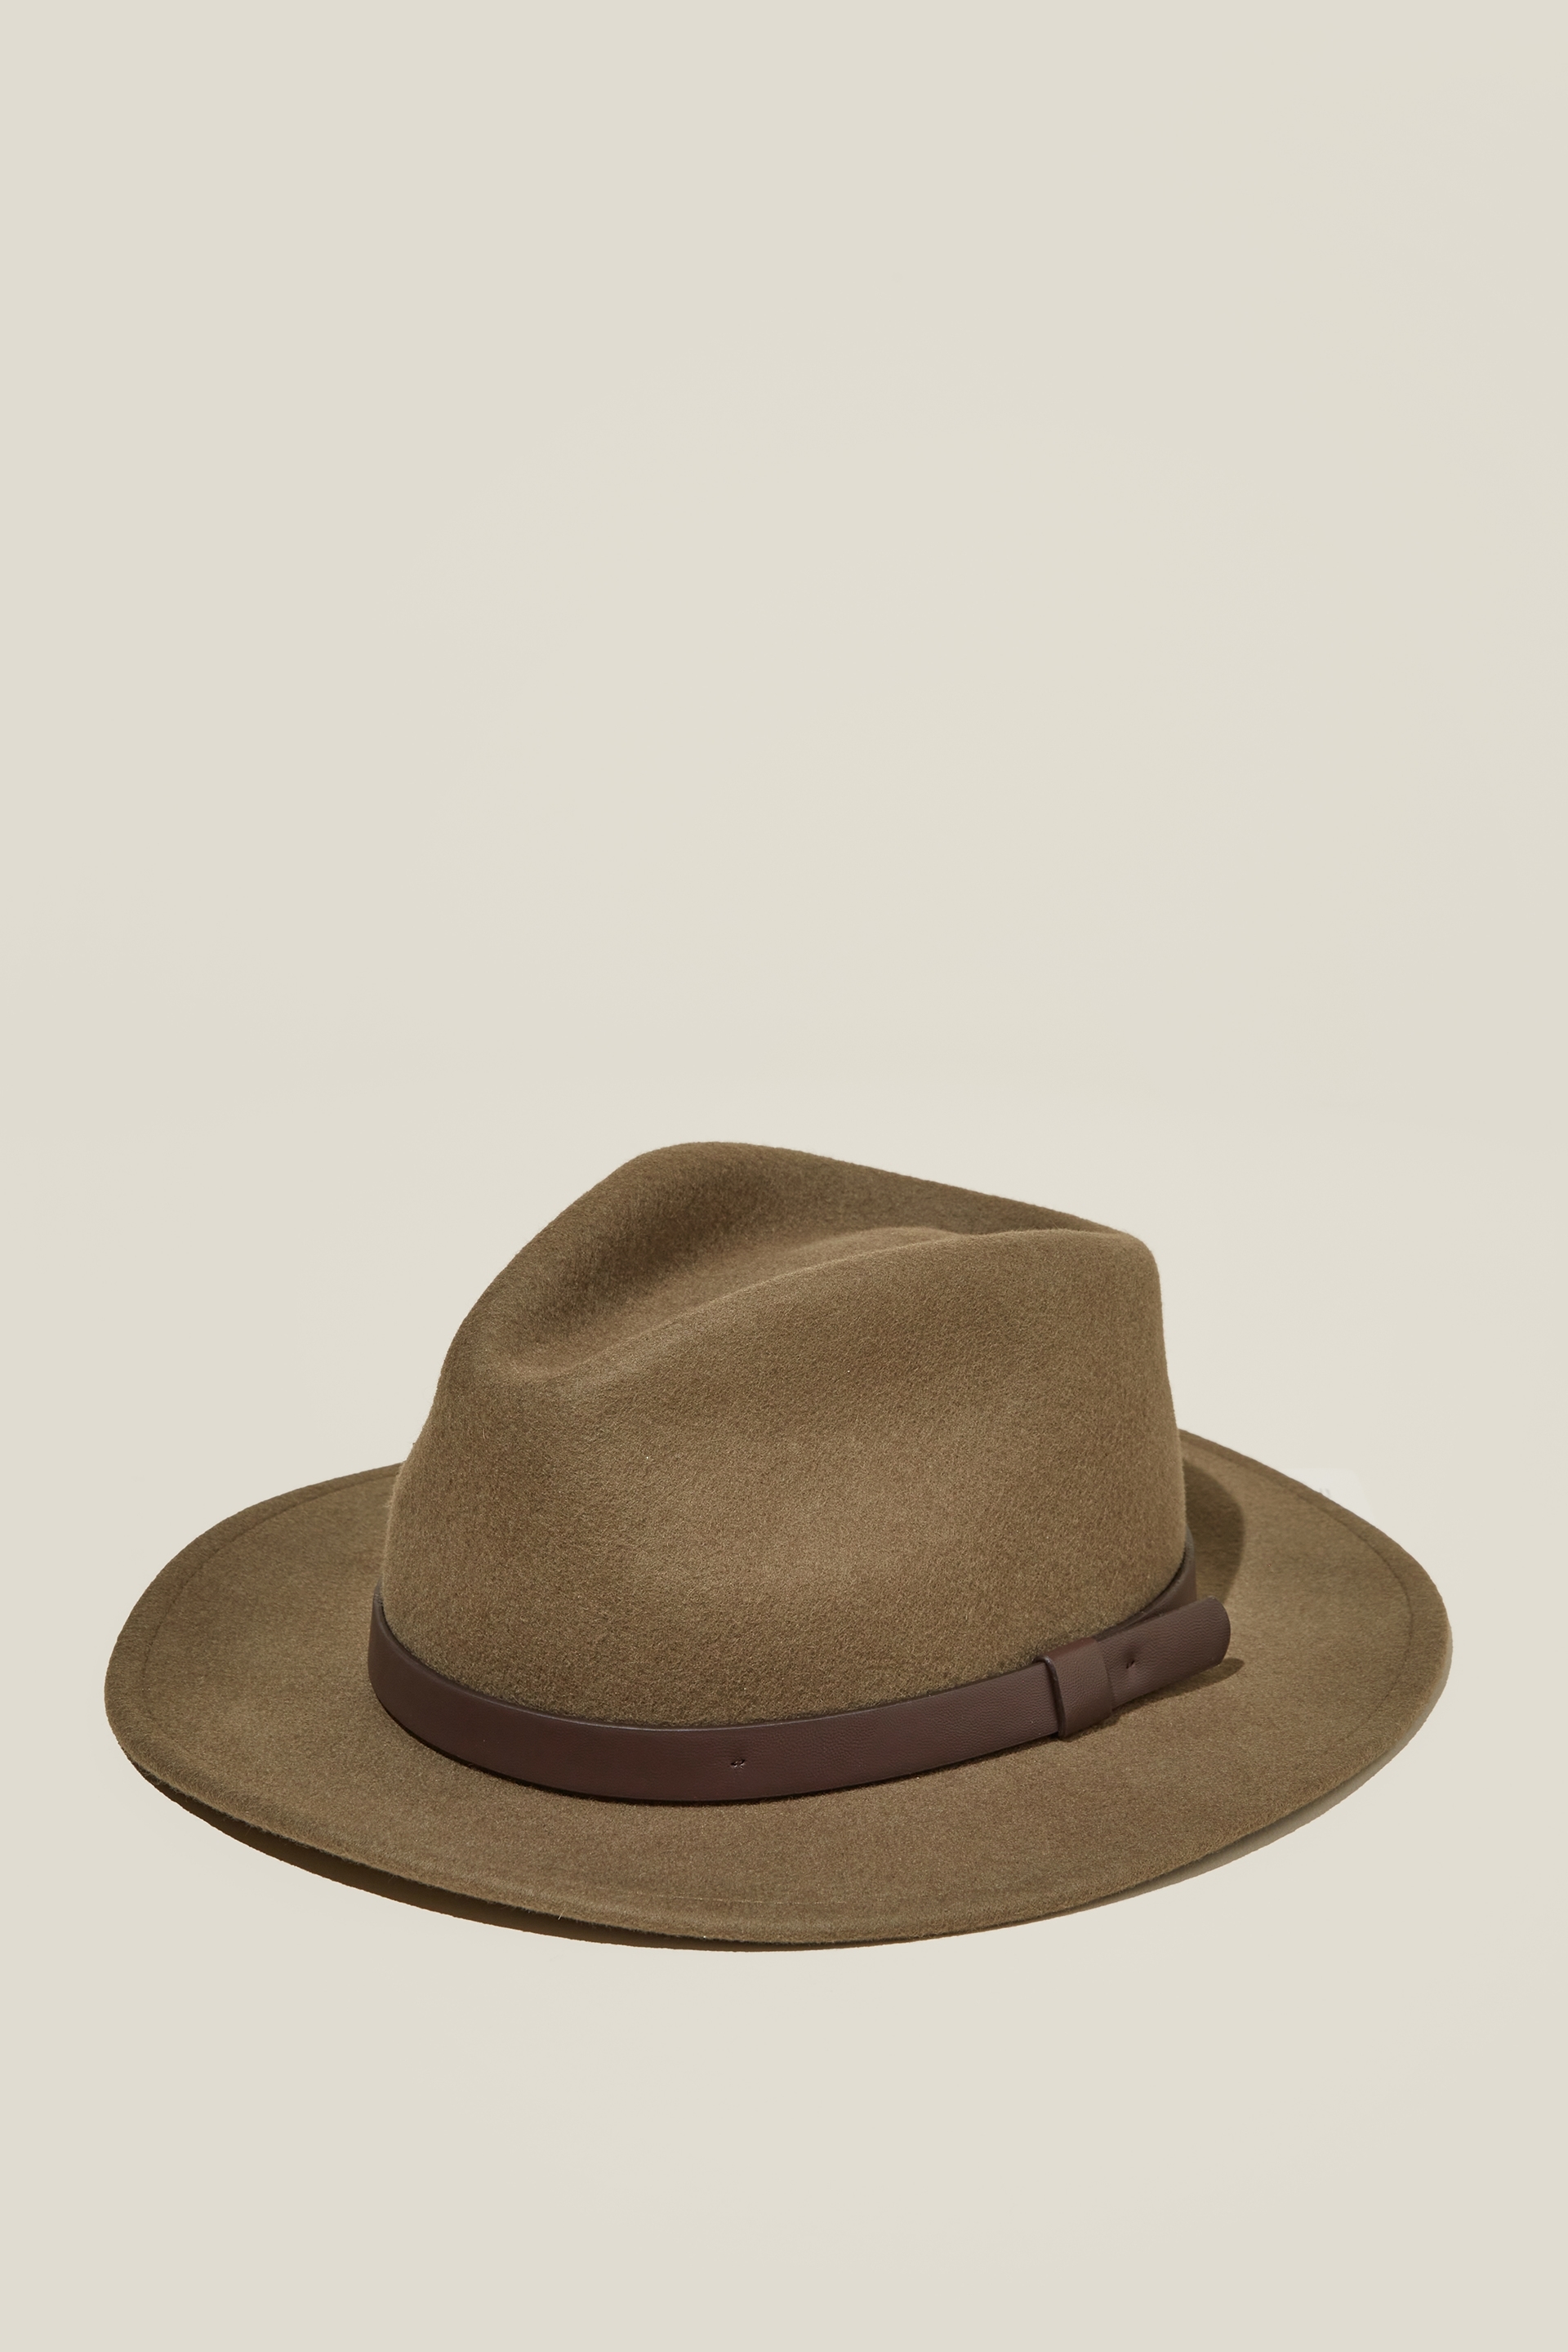 Cotton On Men - Wide Brim Felt Hat - Fawn/Brown